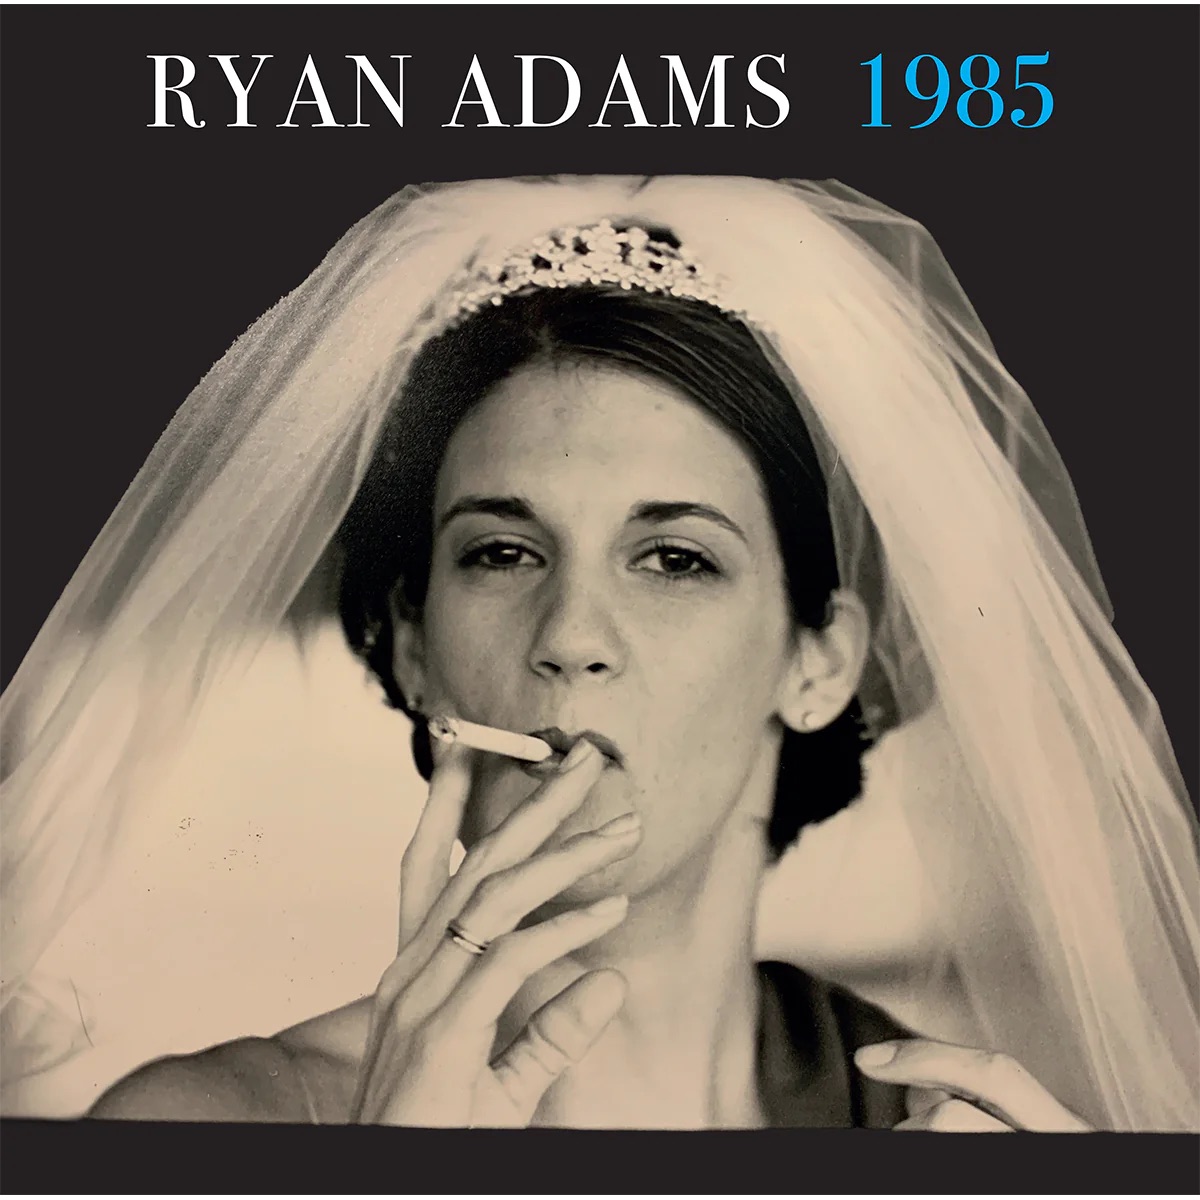 ALBUM REVIEW: 1985 by Ryan Adams